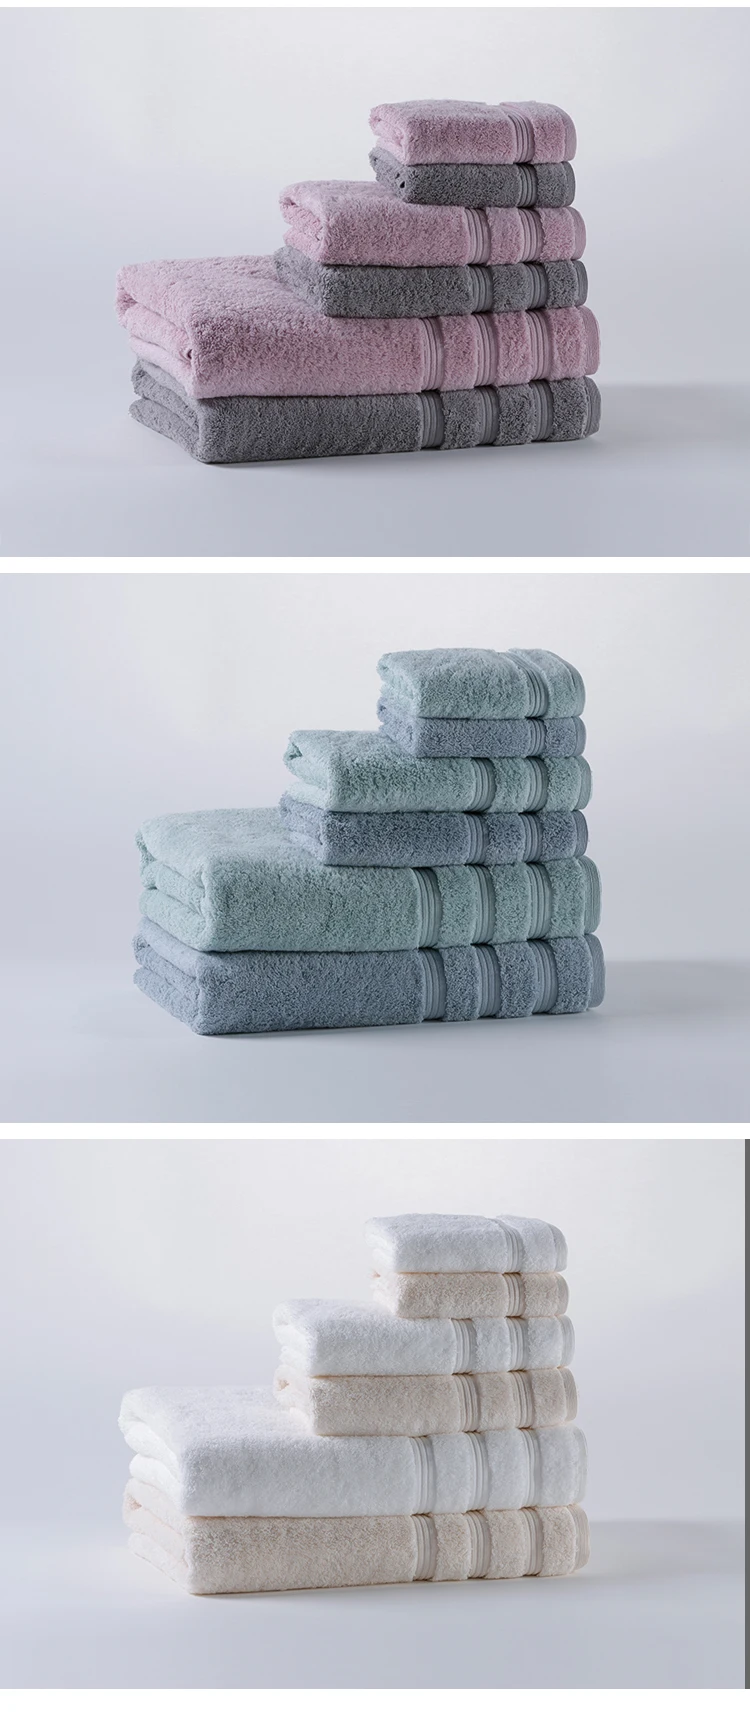 OEM Design Best Selling Plain Dyed Egyptian Hilton Cotton Hotel Face Towel